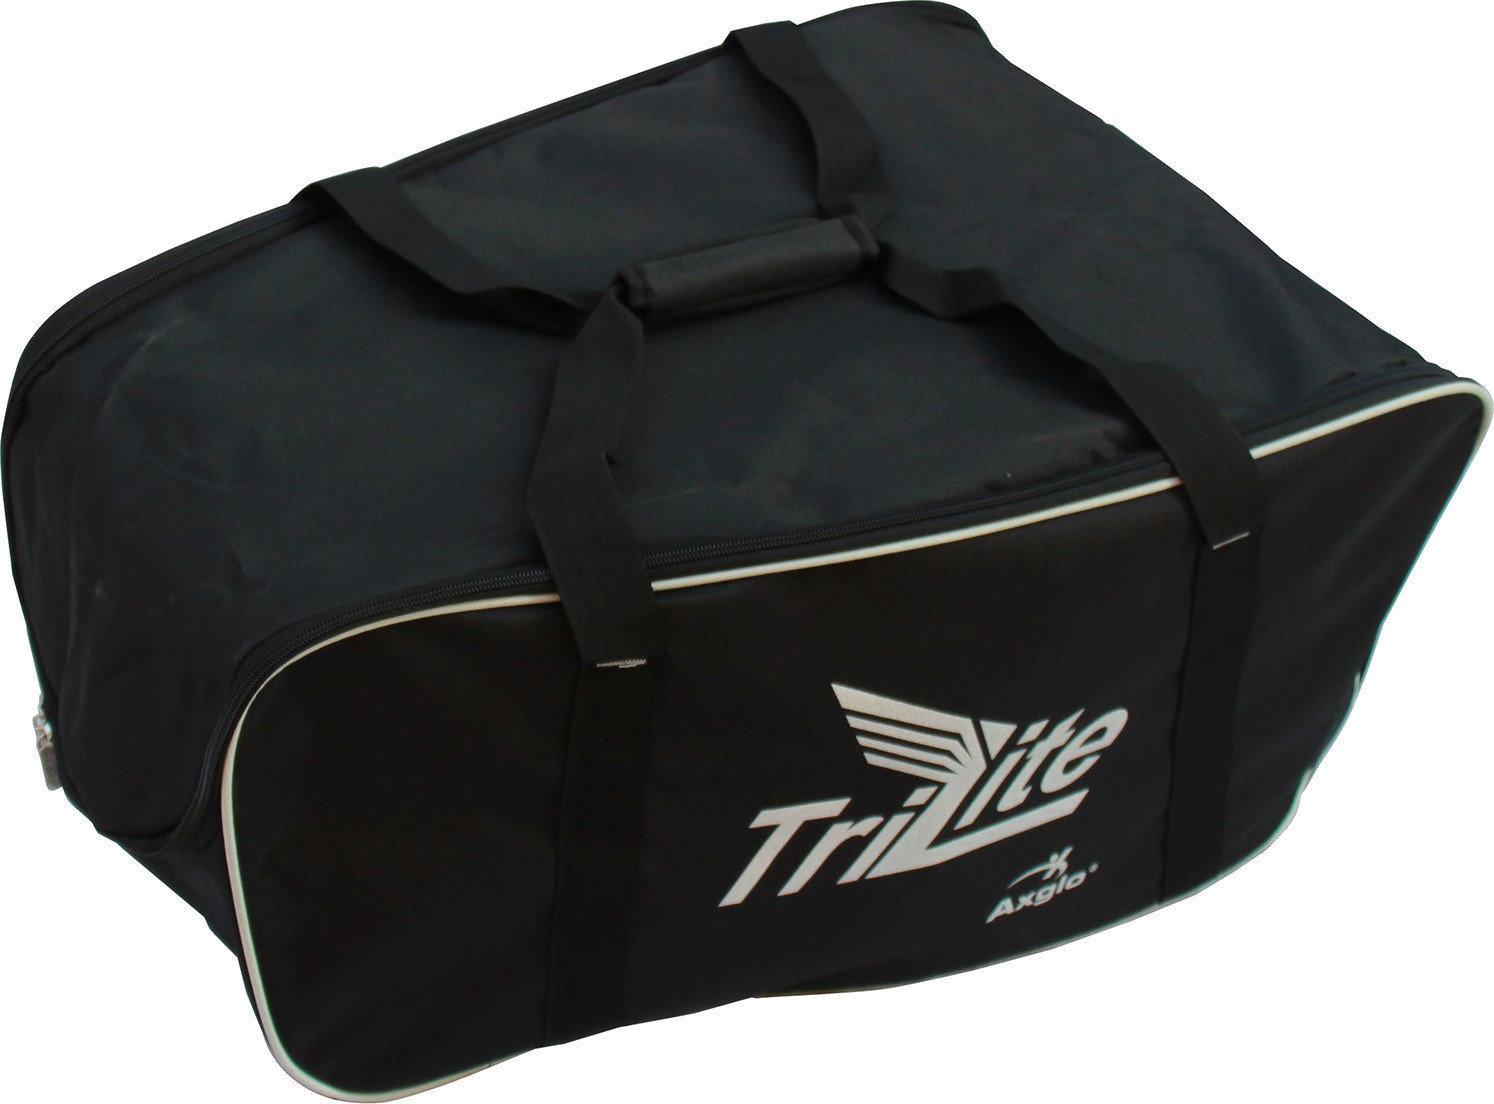 Axglo TriLite Transport bag Axglo